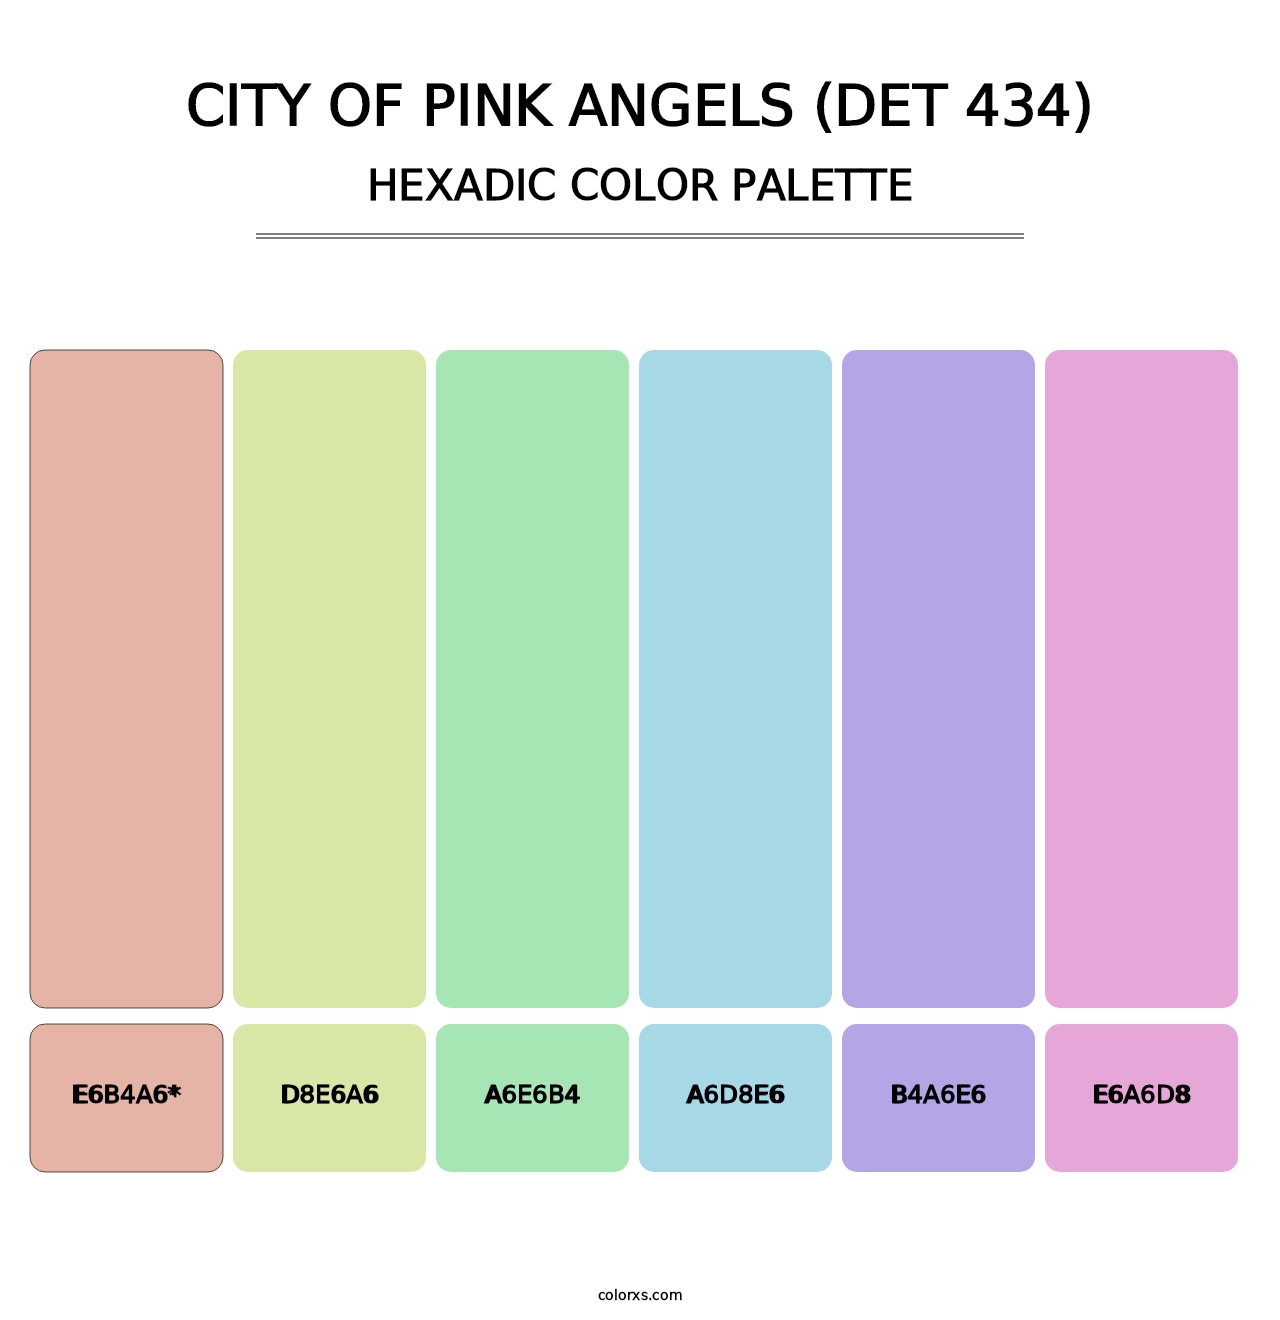 City of Pink Angels (DET 434) - Hexadic Color Palette